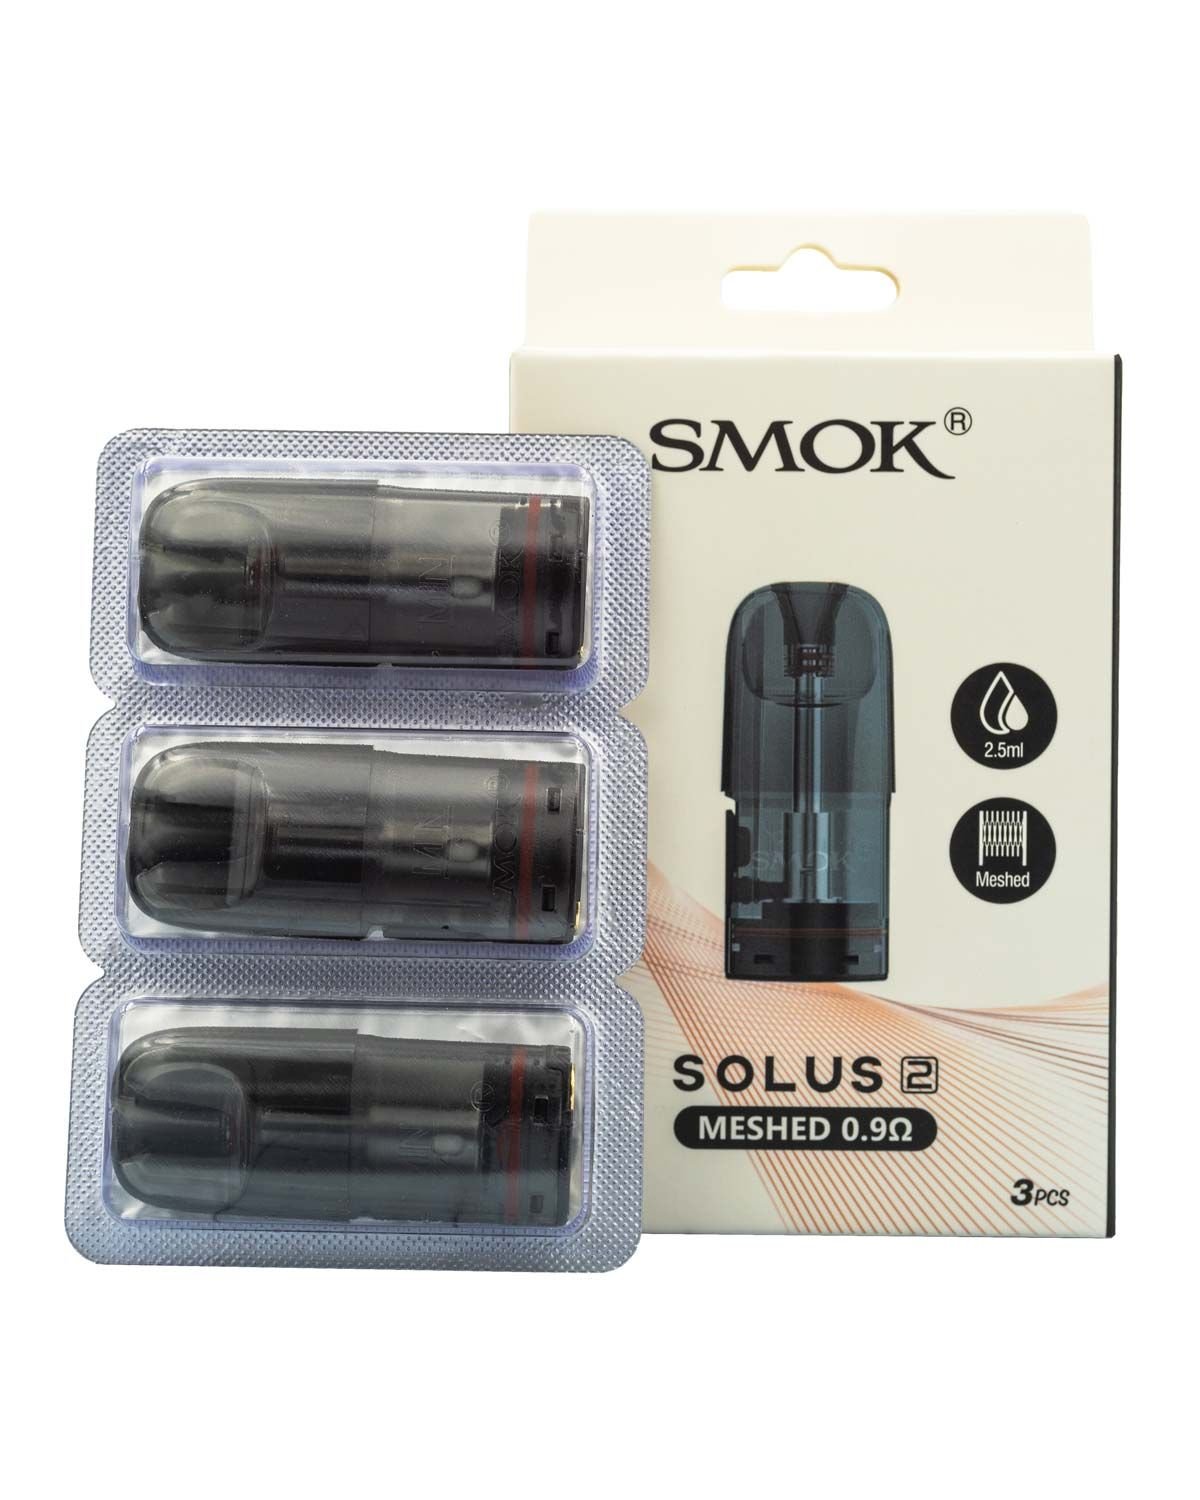 SMOK SOLUS 2 REPLACEMENT PODS - EJUICEOVERSTOCK.COM